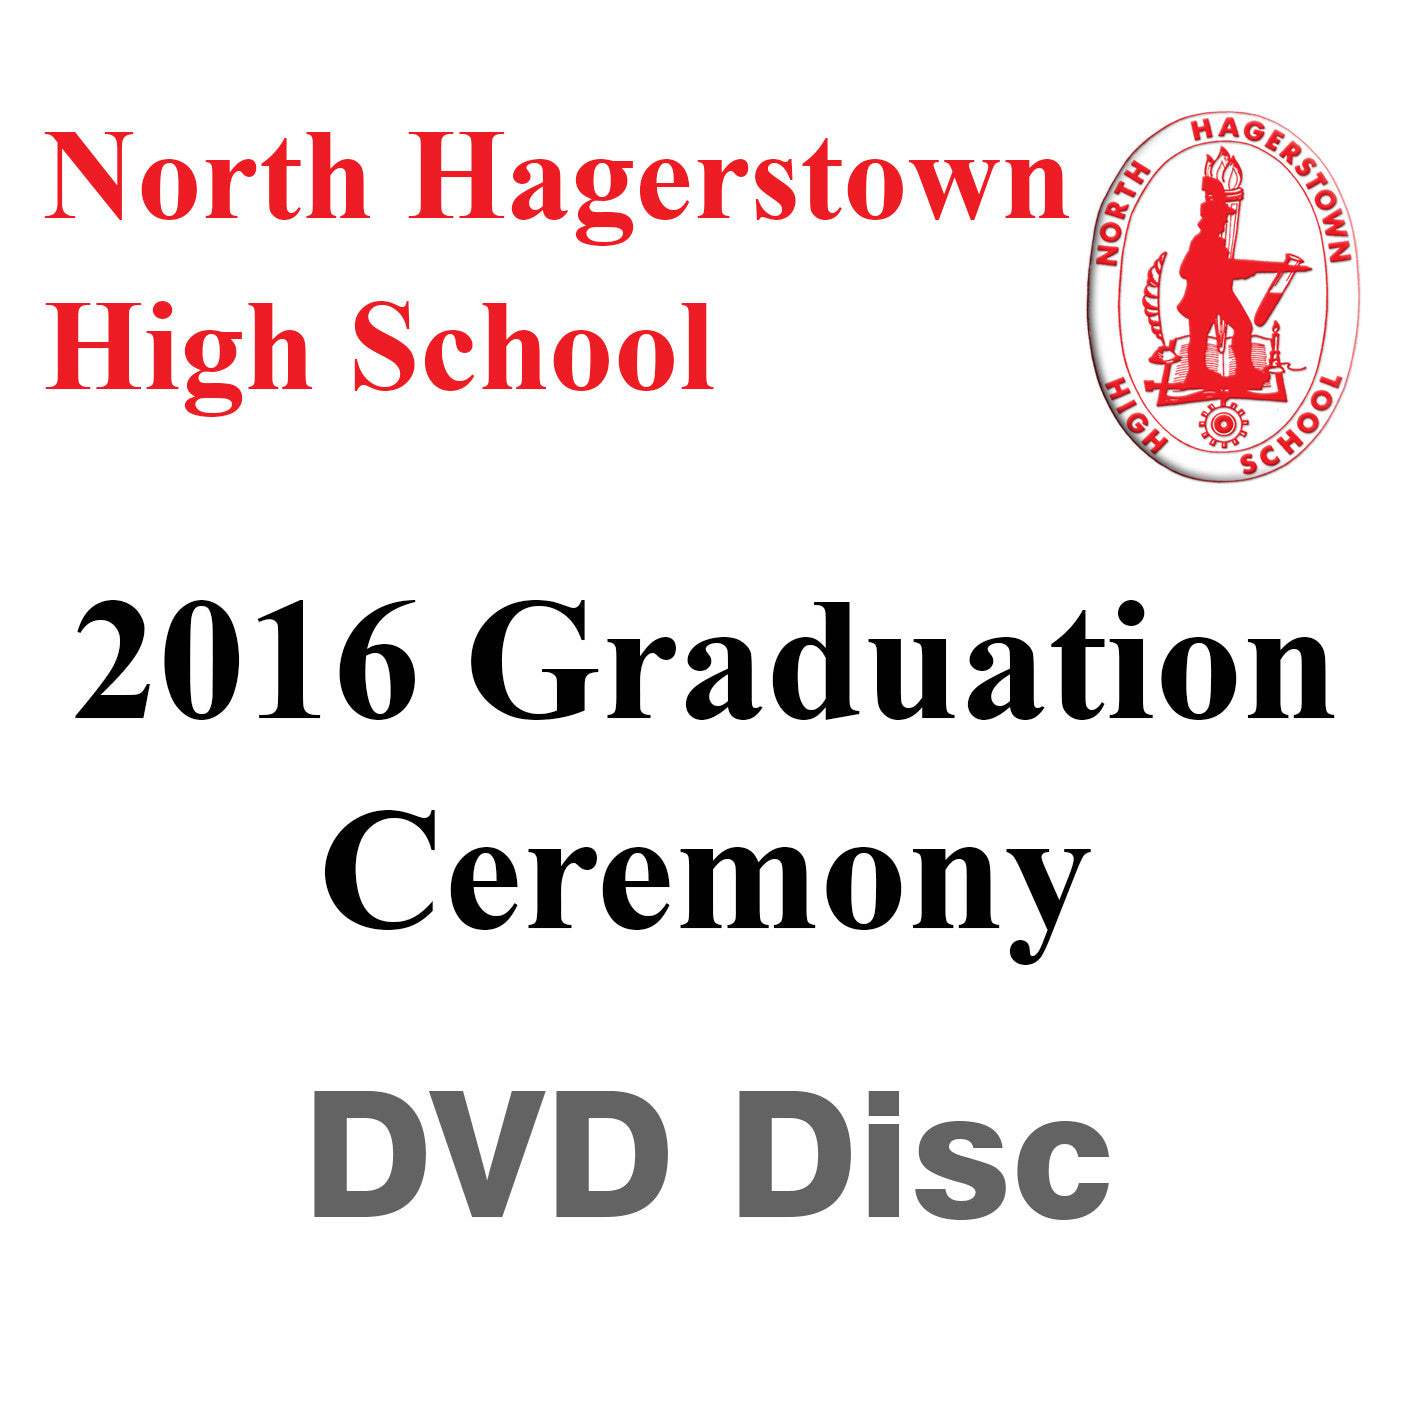 North Hagerstown High School Graduation 2016 DVD Antietam Media